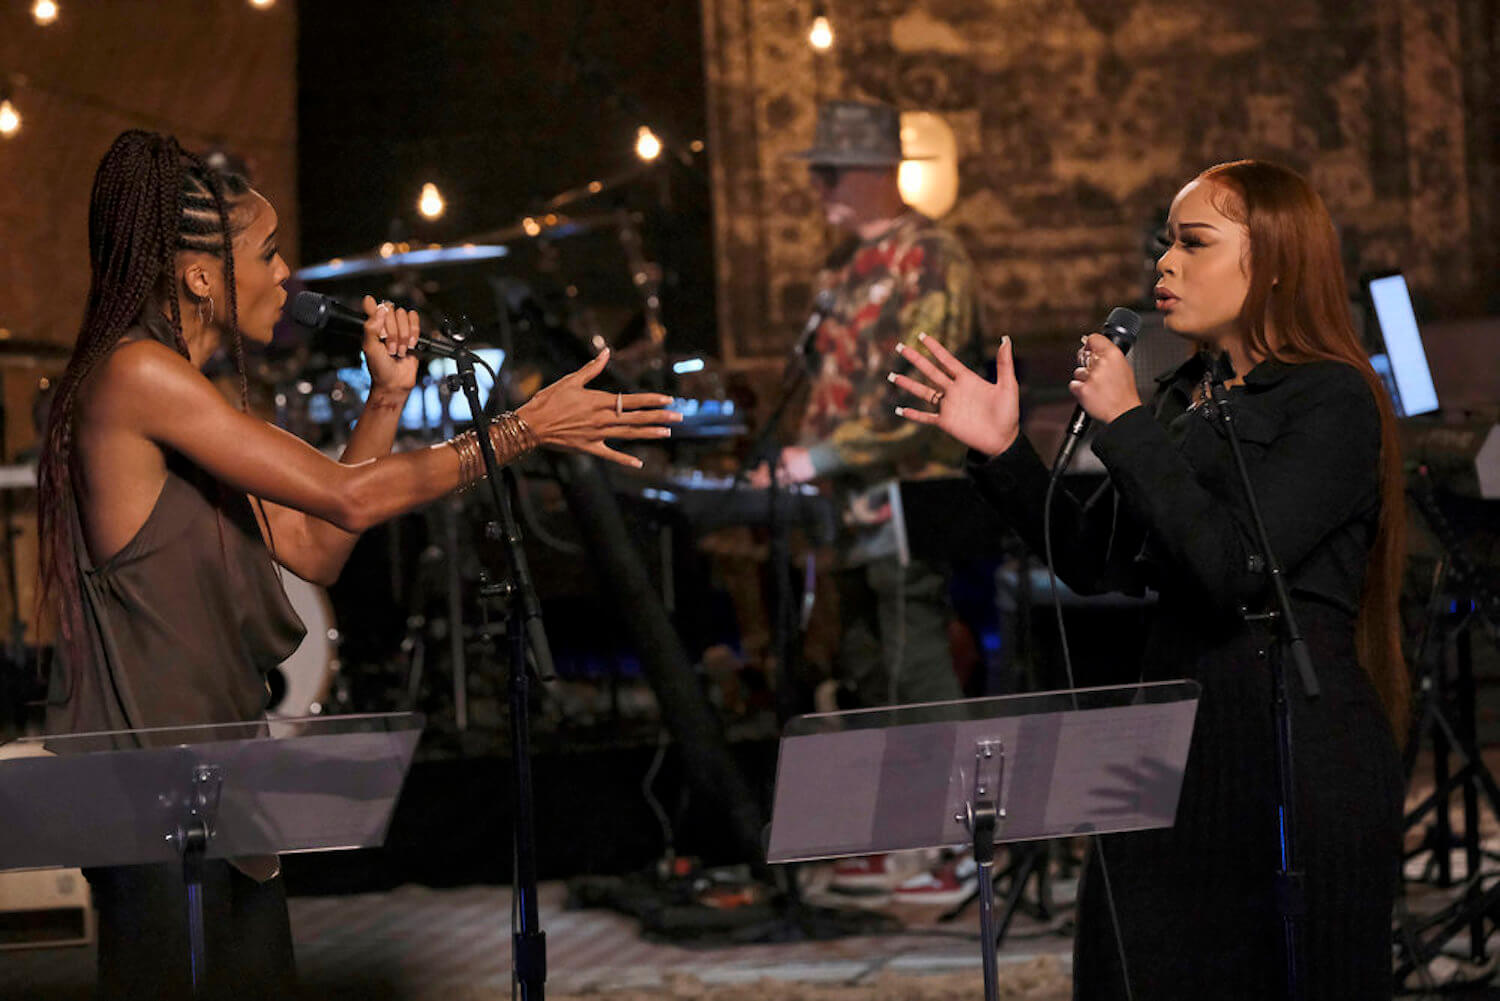 Chloe Abbott vs. NariYella singing against each other on stage in 'The Voice' Season 23 battles